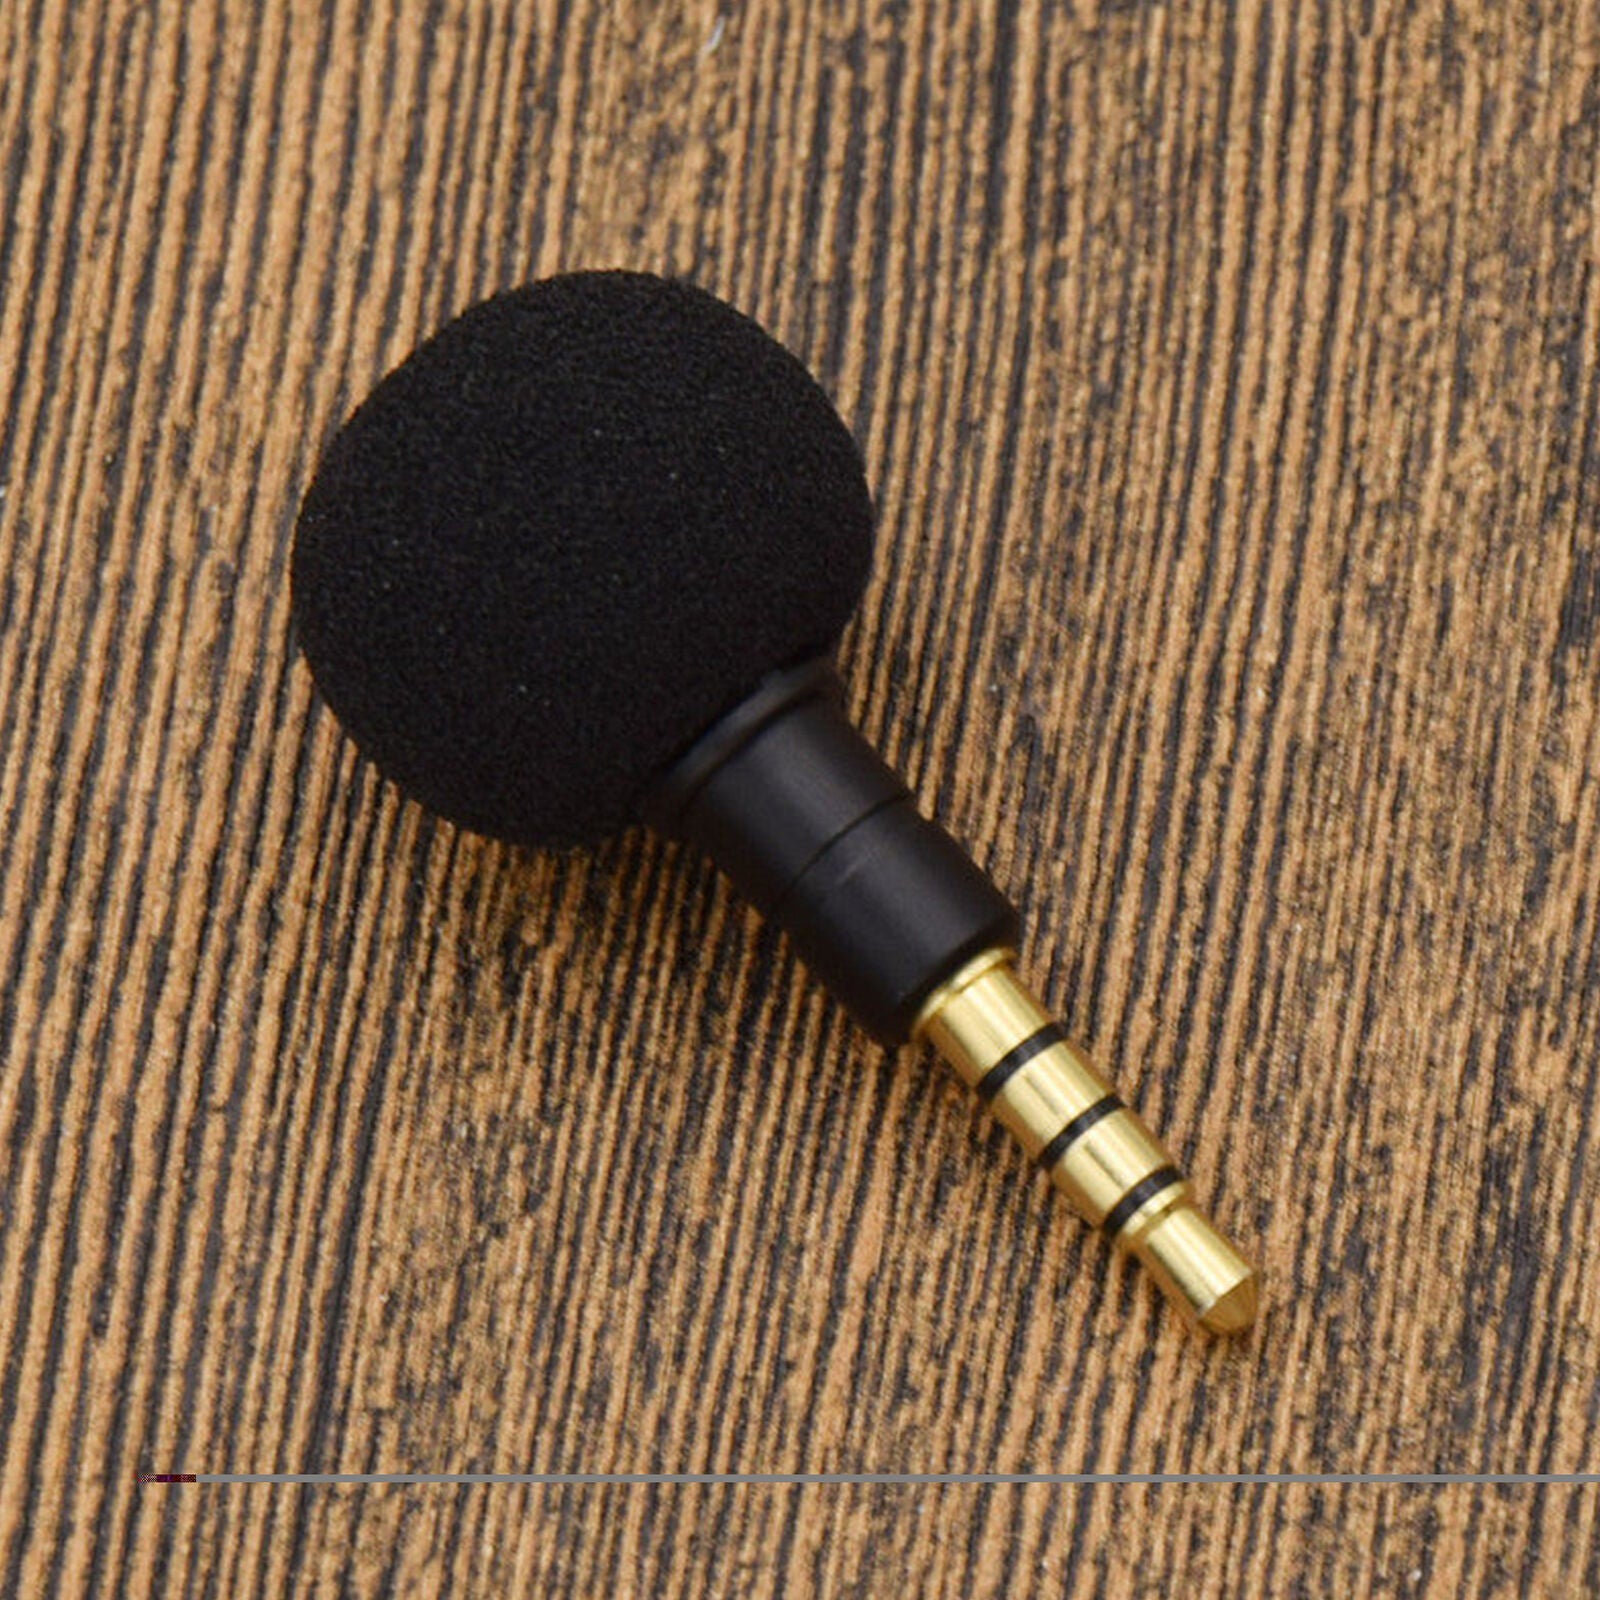 3.5mm Mini Black Wireless Microphone for Smartphone Mobile Phone Recording